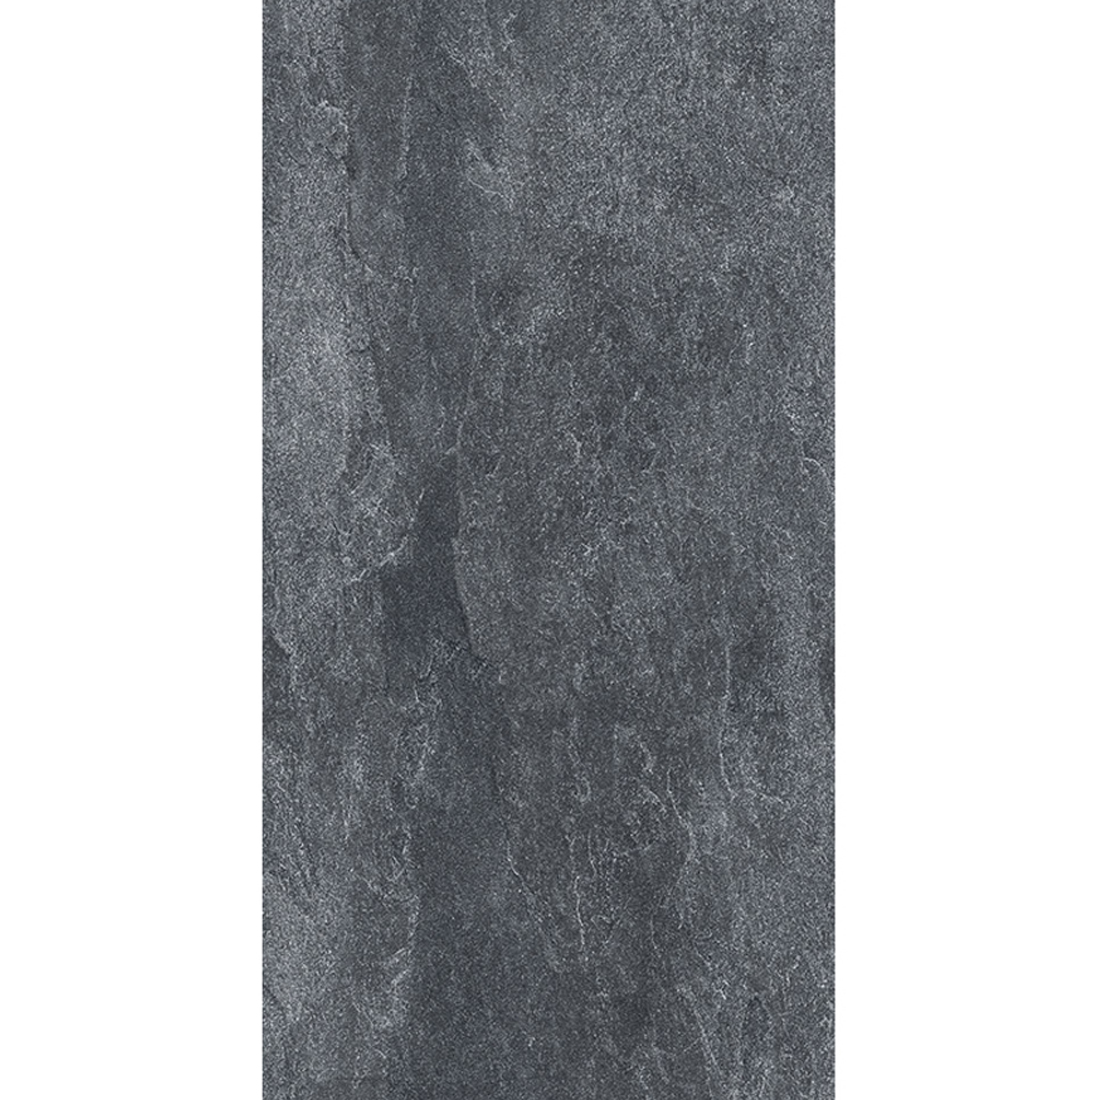 Nitco Nordic Coal N6904 Matte Glazed Vitrified Tile